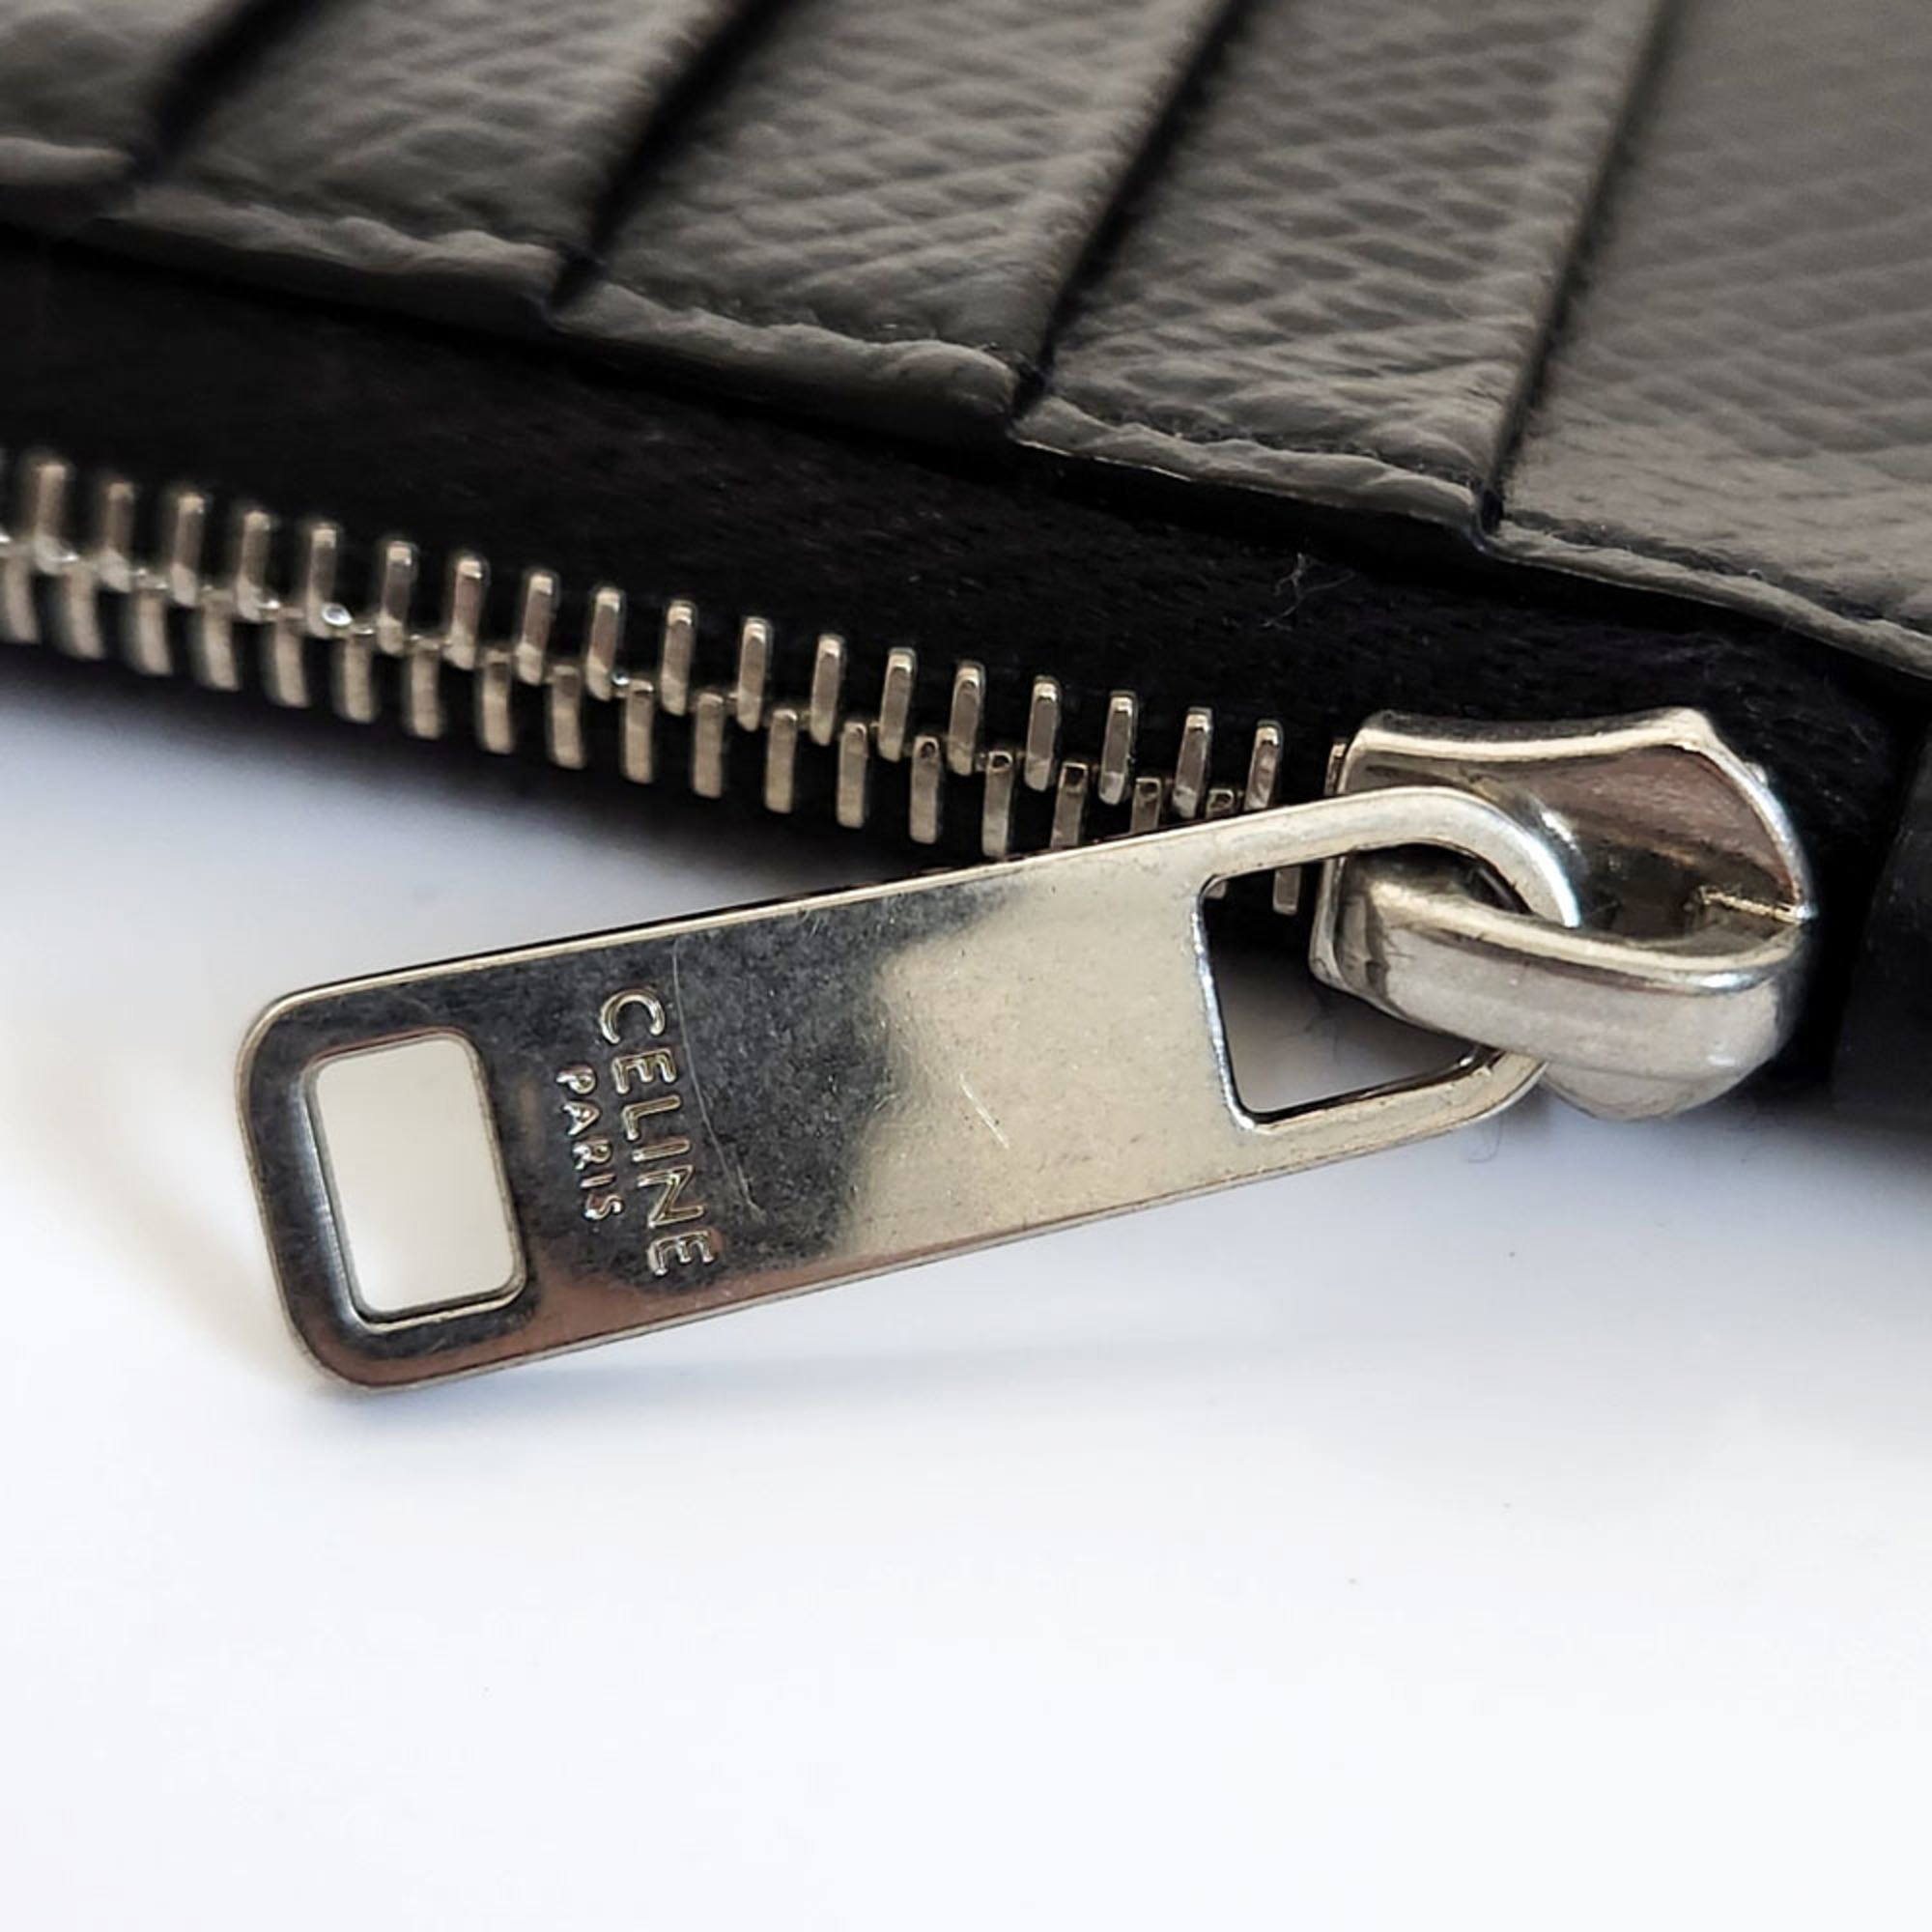 CELINE Fragment Case - Black Leather Wallet/Coin Case, Coin Purse, Business Card